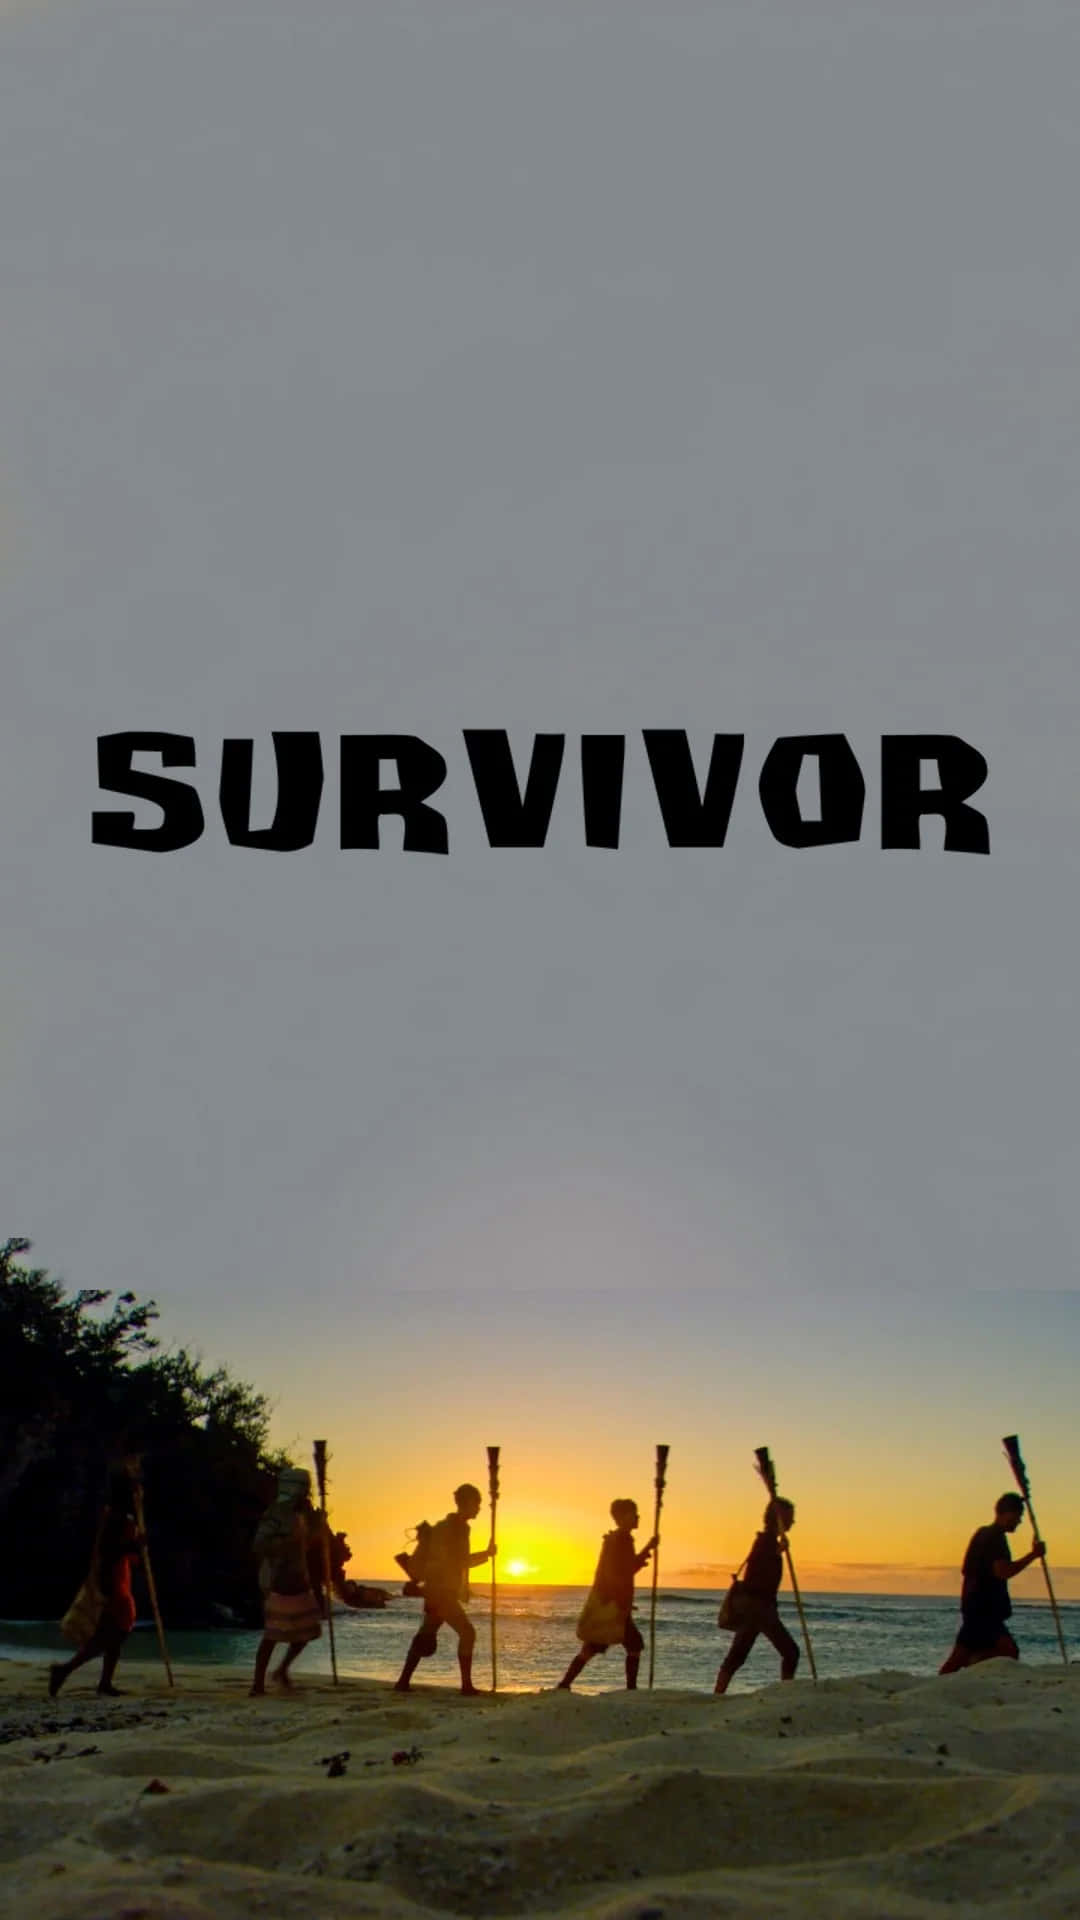 Survivor Wallpaper